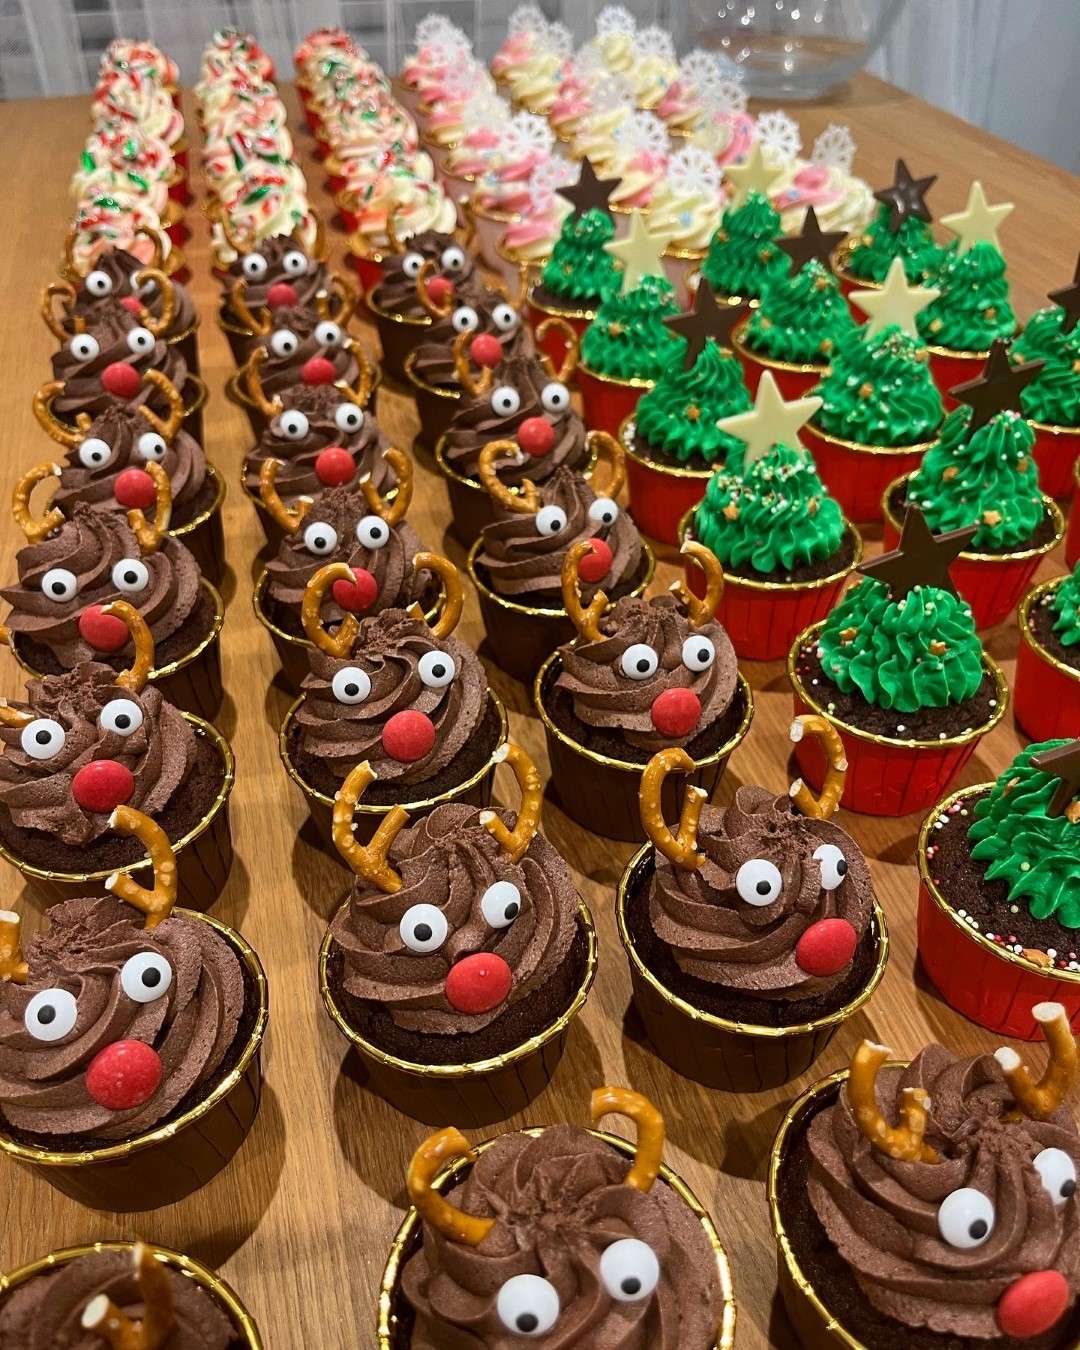 custom made cupcakes